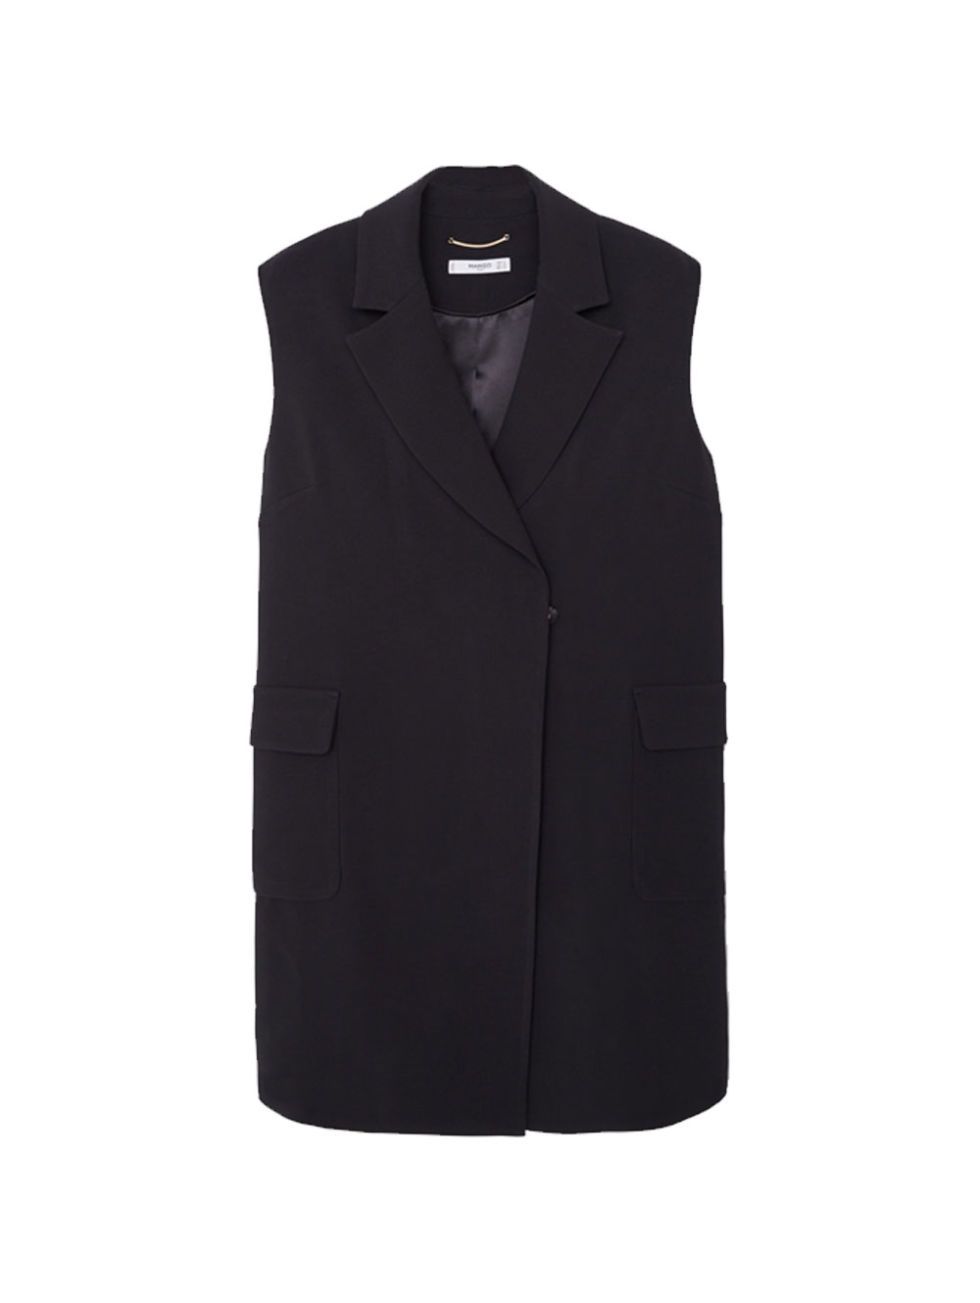 Collar, Coat, Sleeve, Outerwear, White, Blazer, Button, Black, Fashion design, Top, 